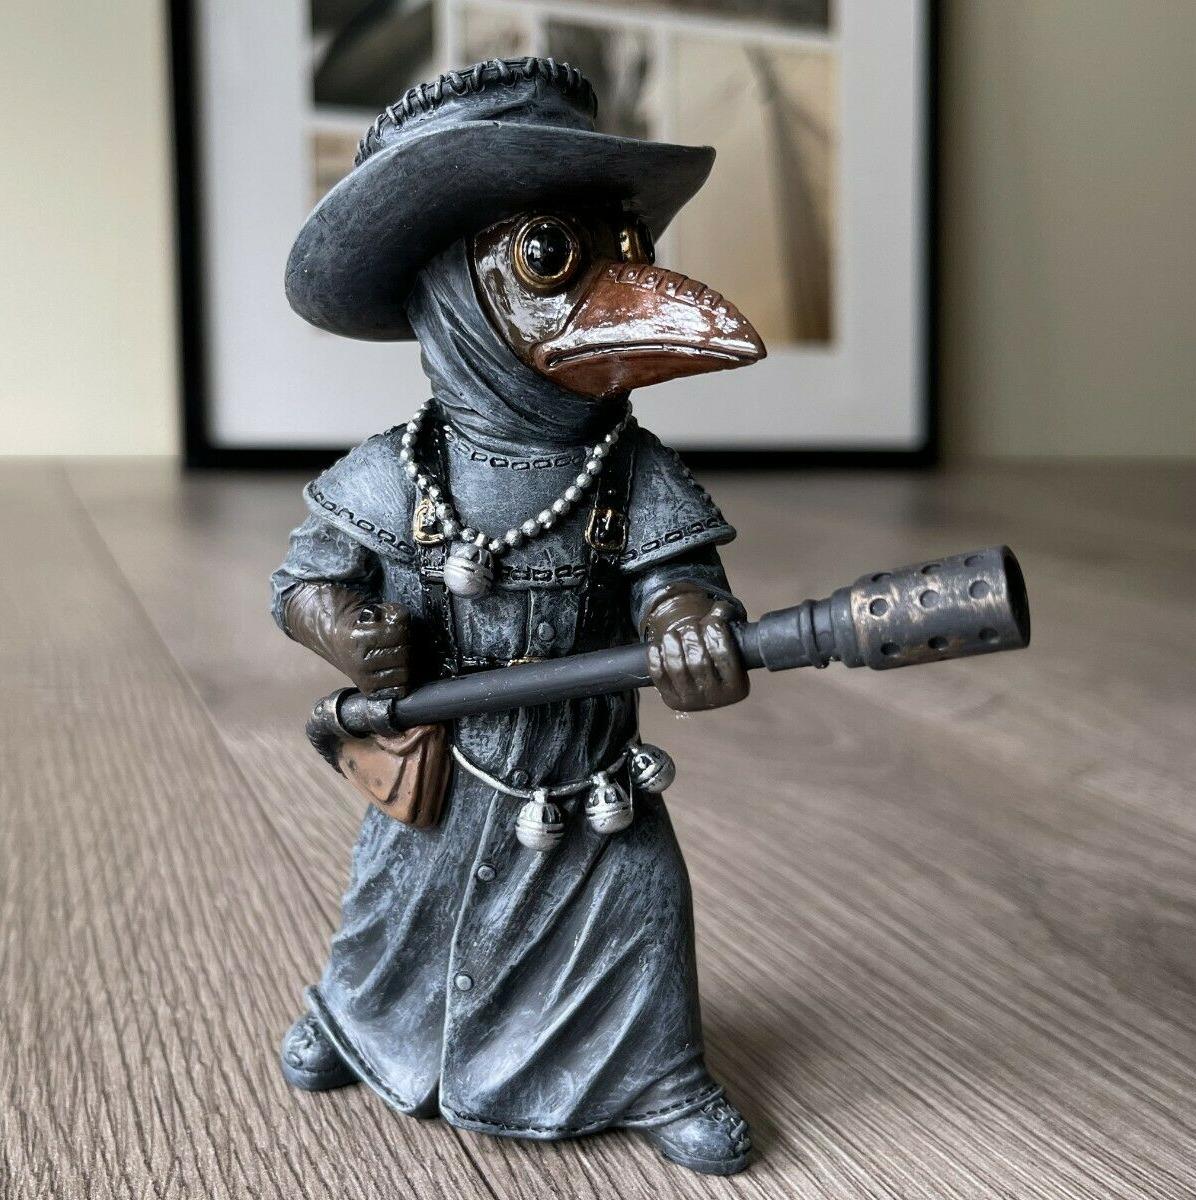 Decorative Custom Made Fantasy Epidemia Plague Doctor Figurine Statue Décor Gift